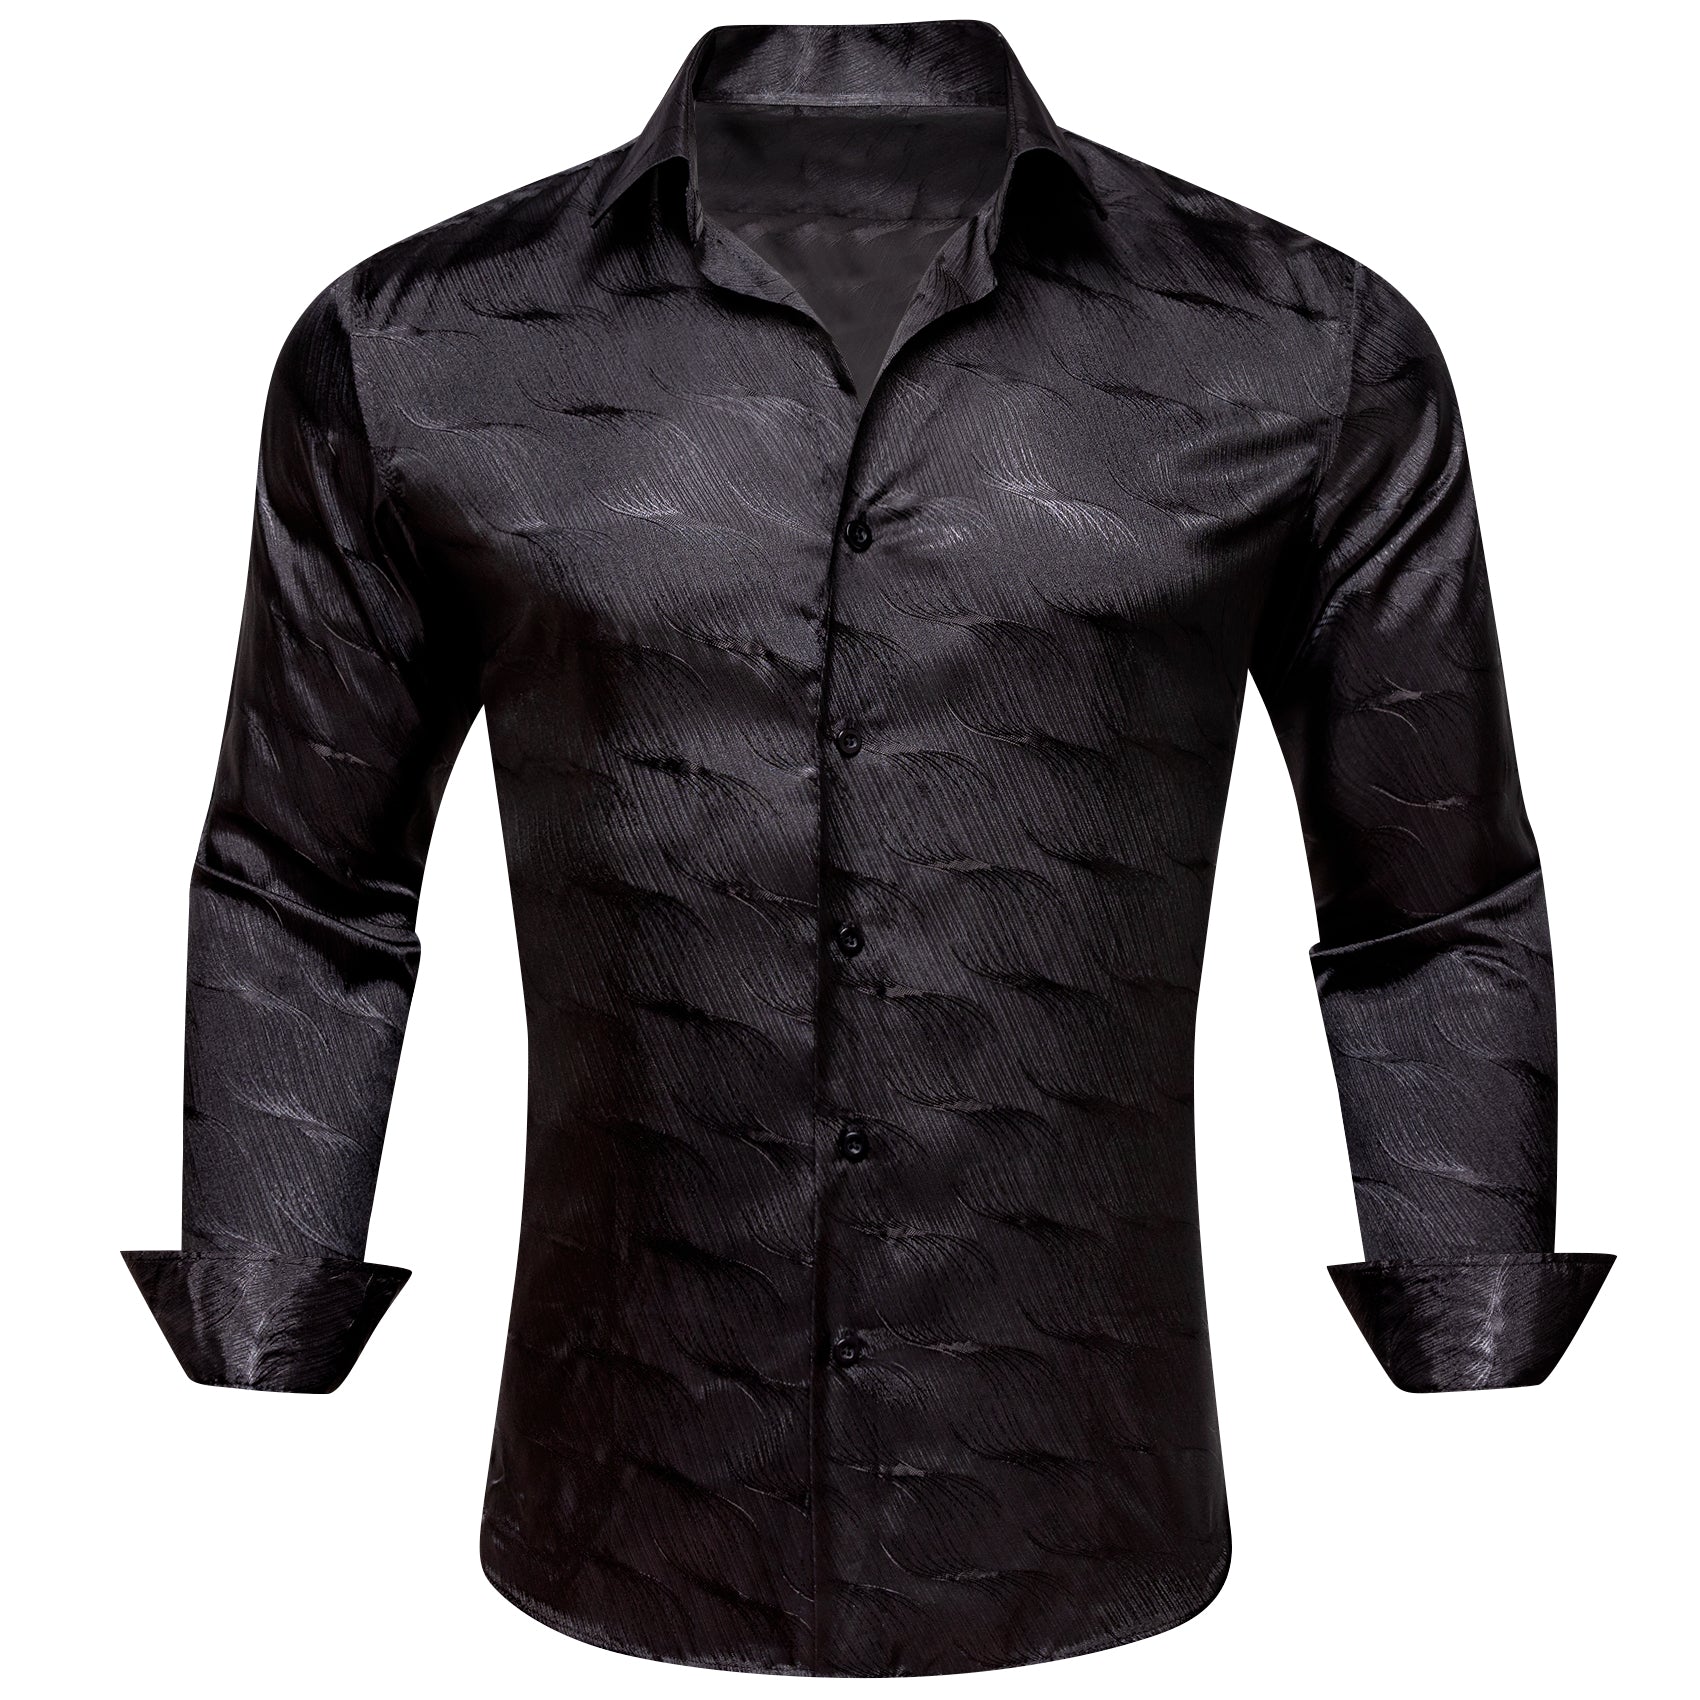 Barry.wang Classy Black Solid Silk Men's Shirt